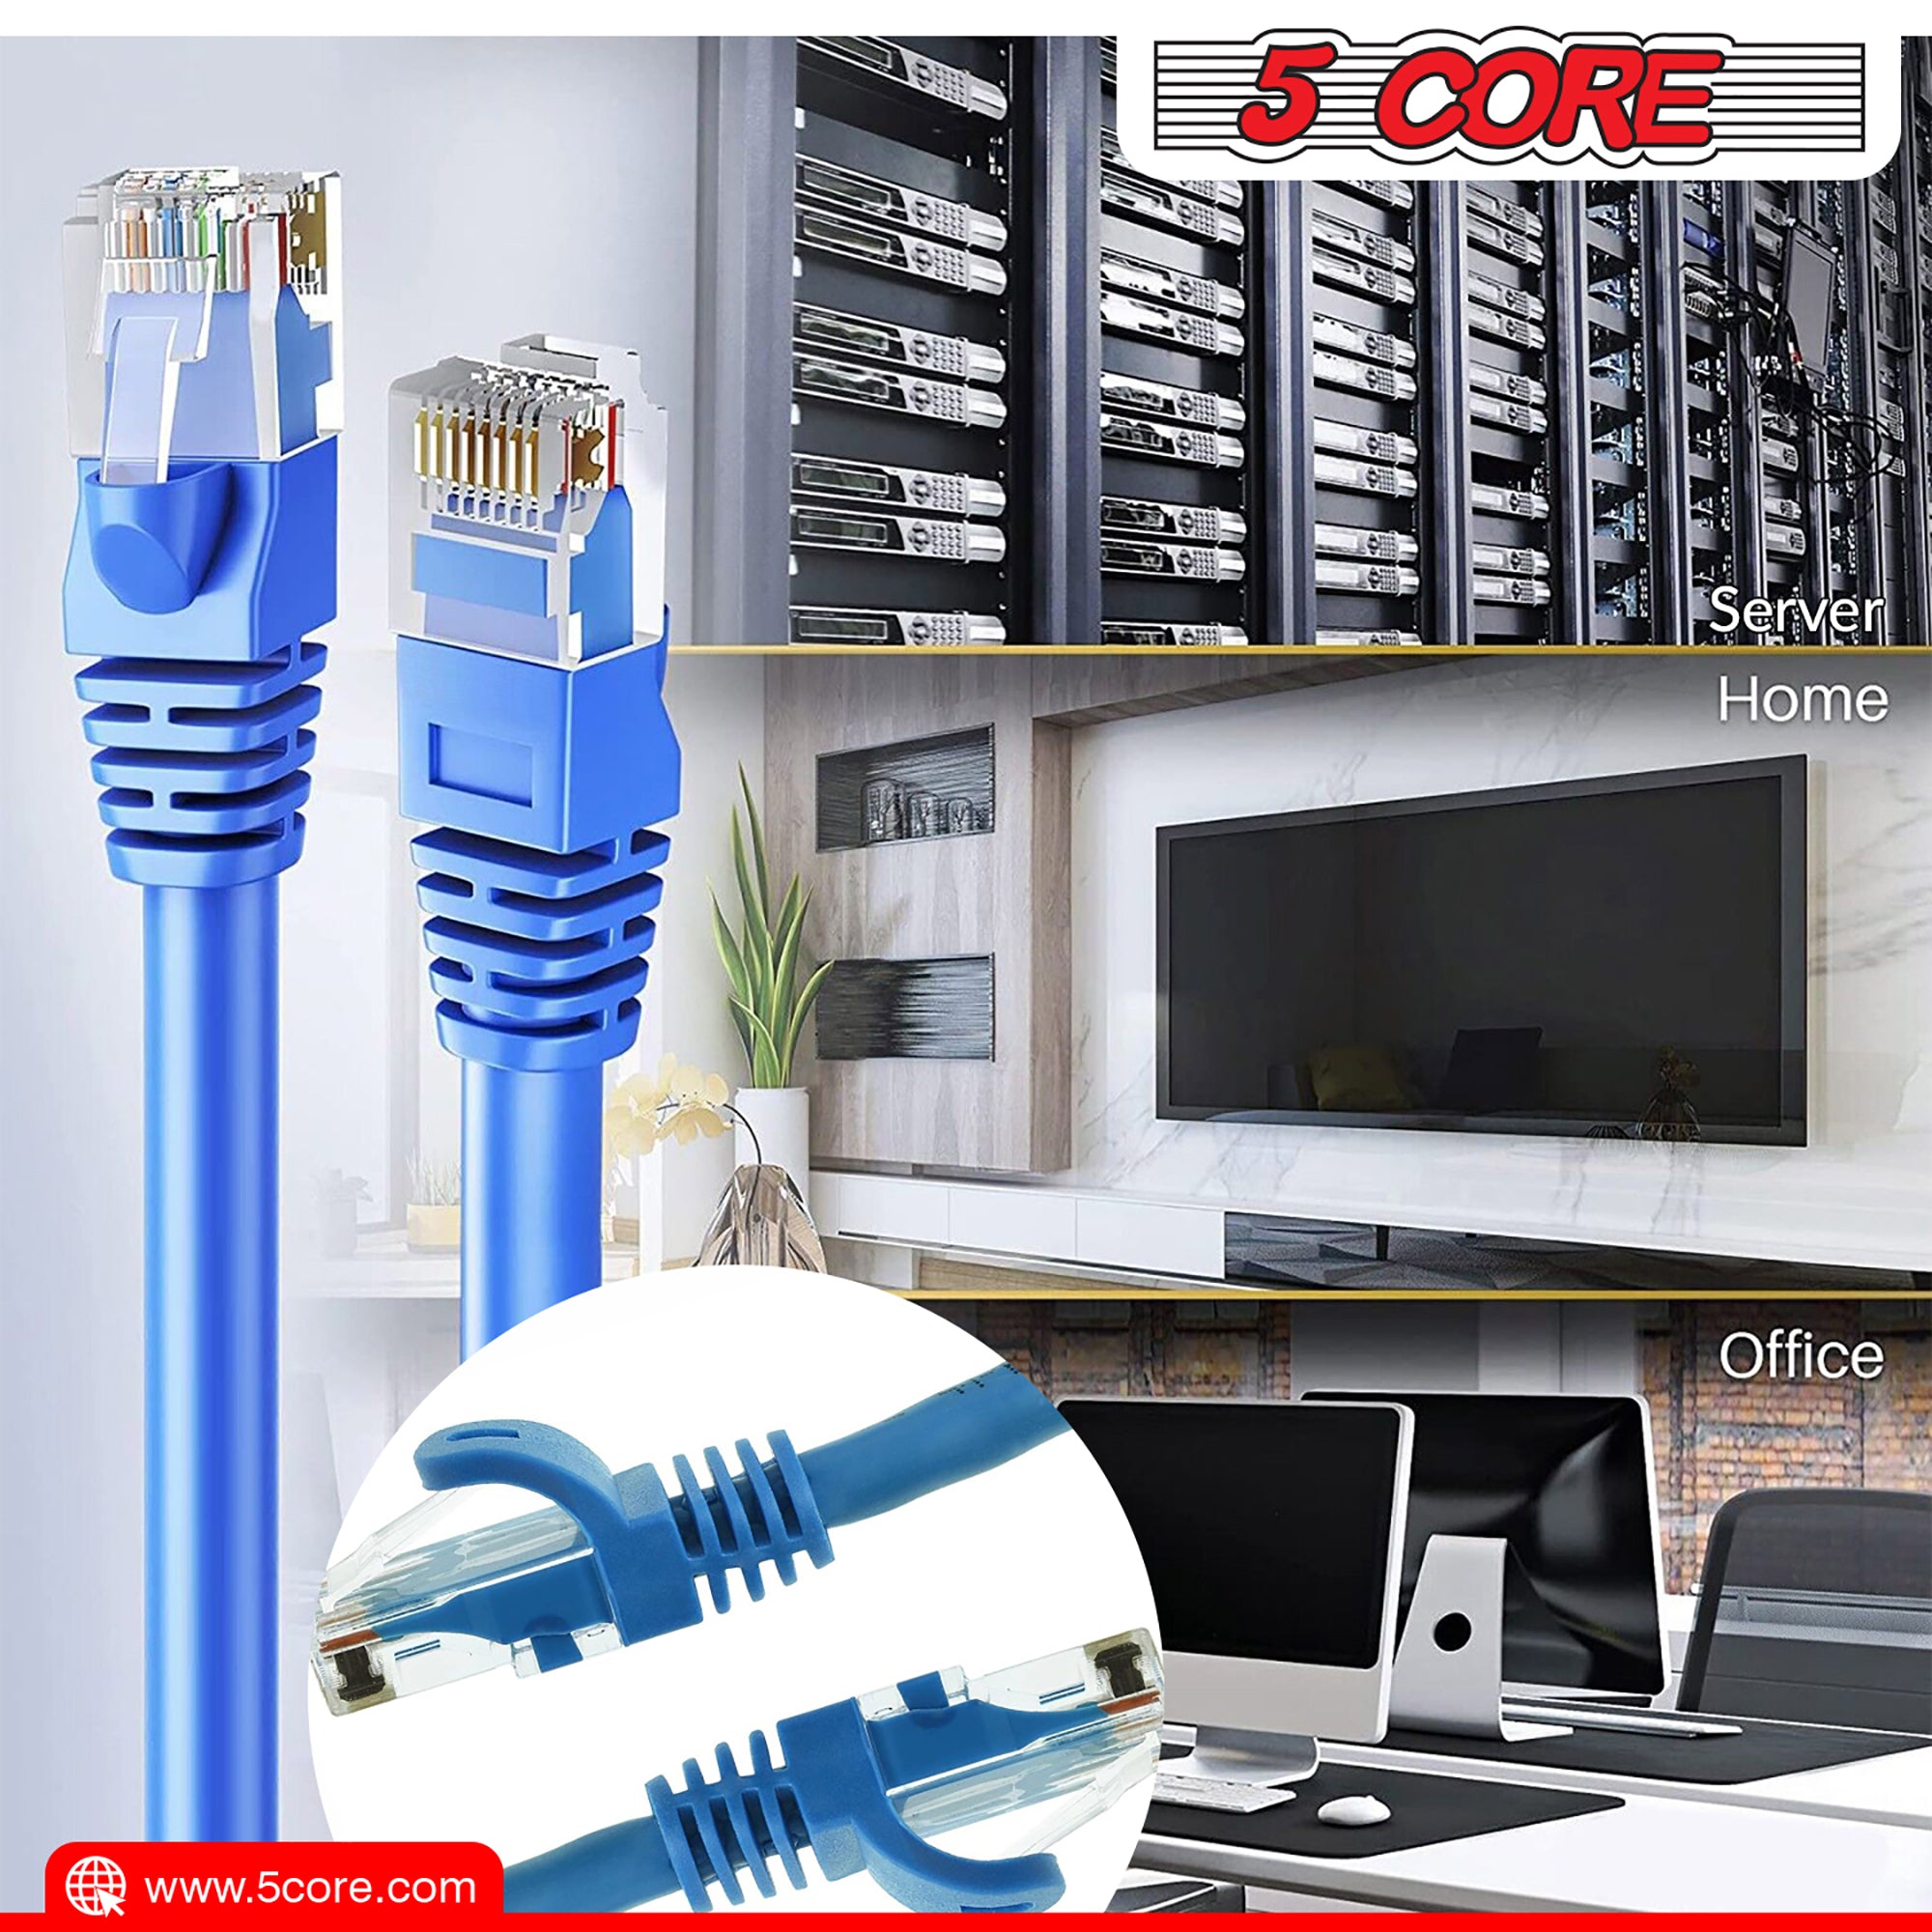 Server internet cable